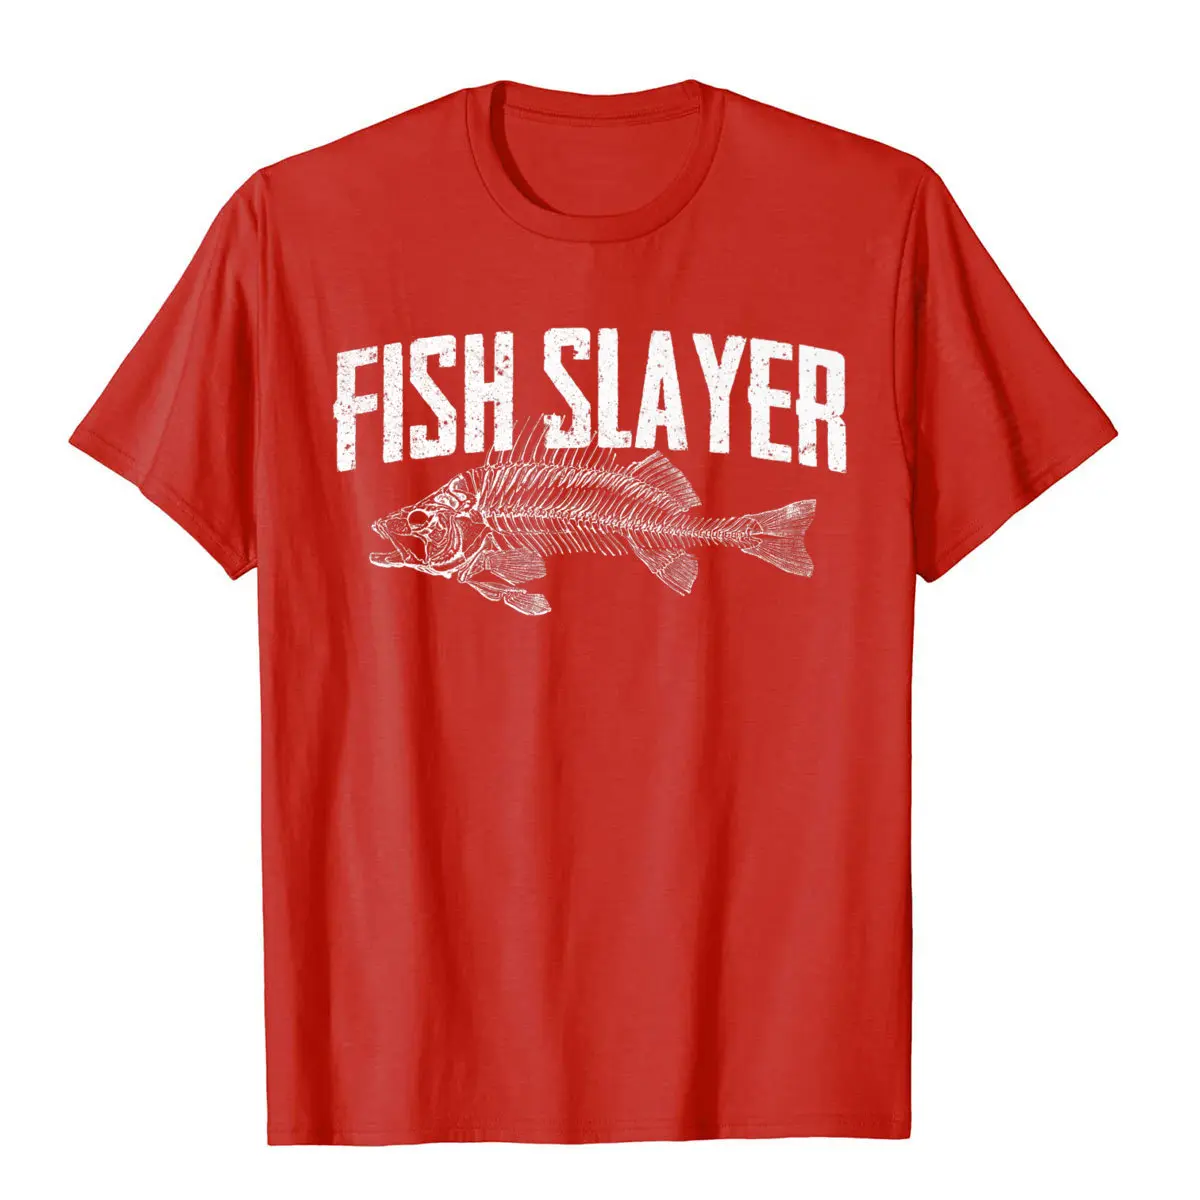 Fish Slayer Fishin Fisherman Fisherwoman T-Shirt Brand New Casual